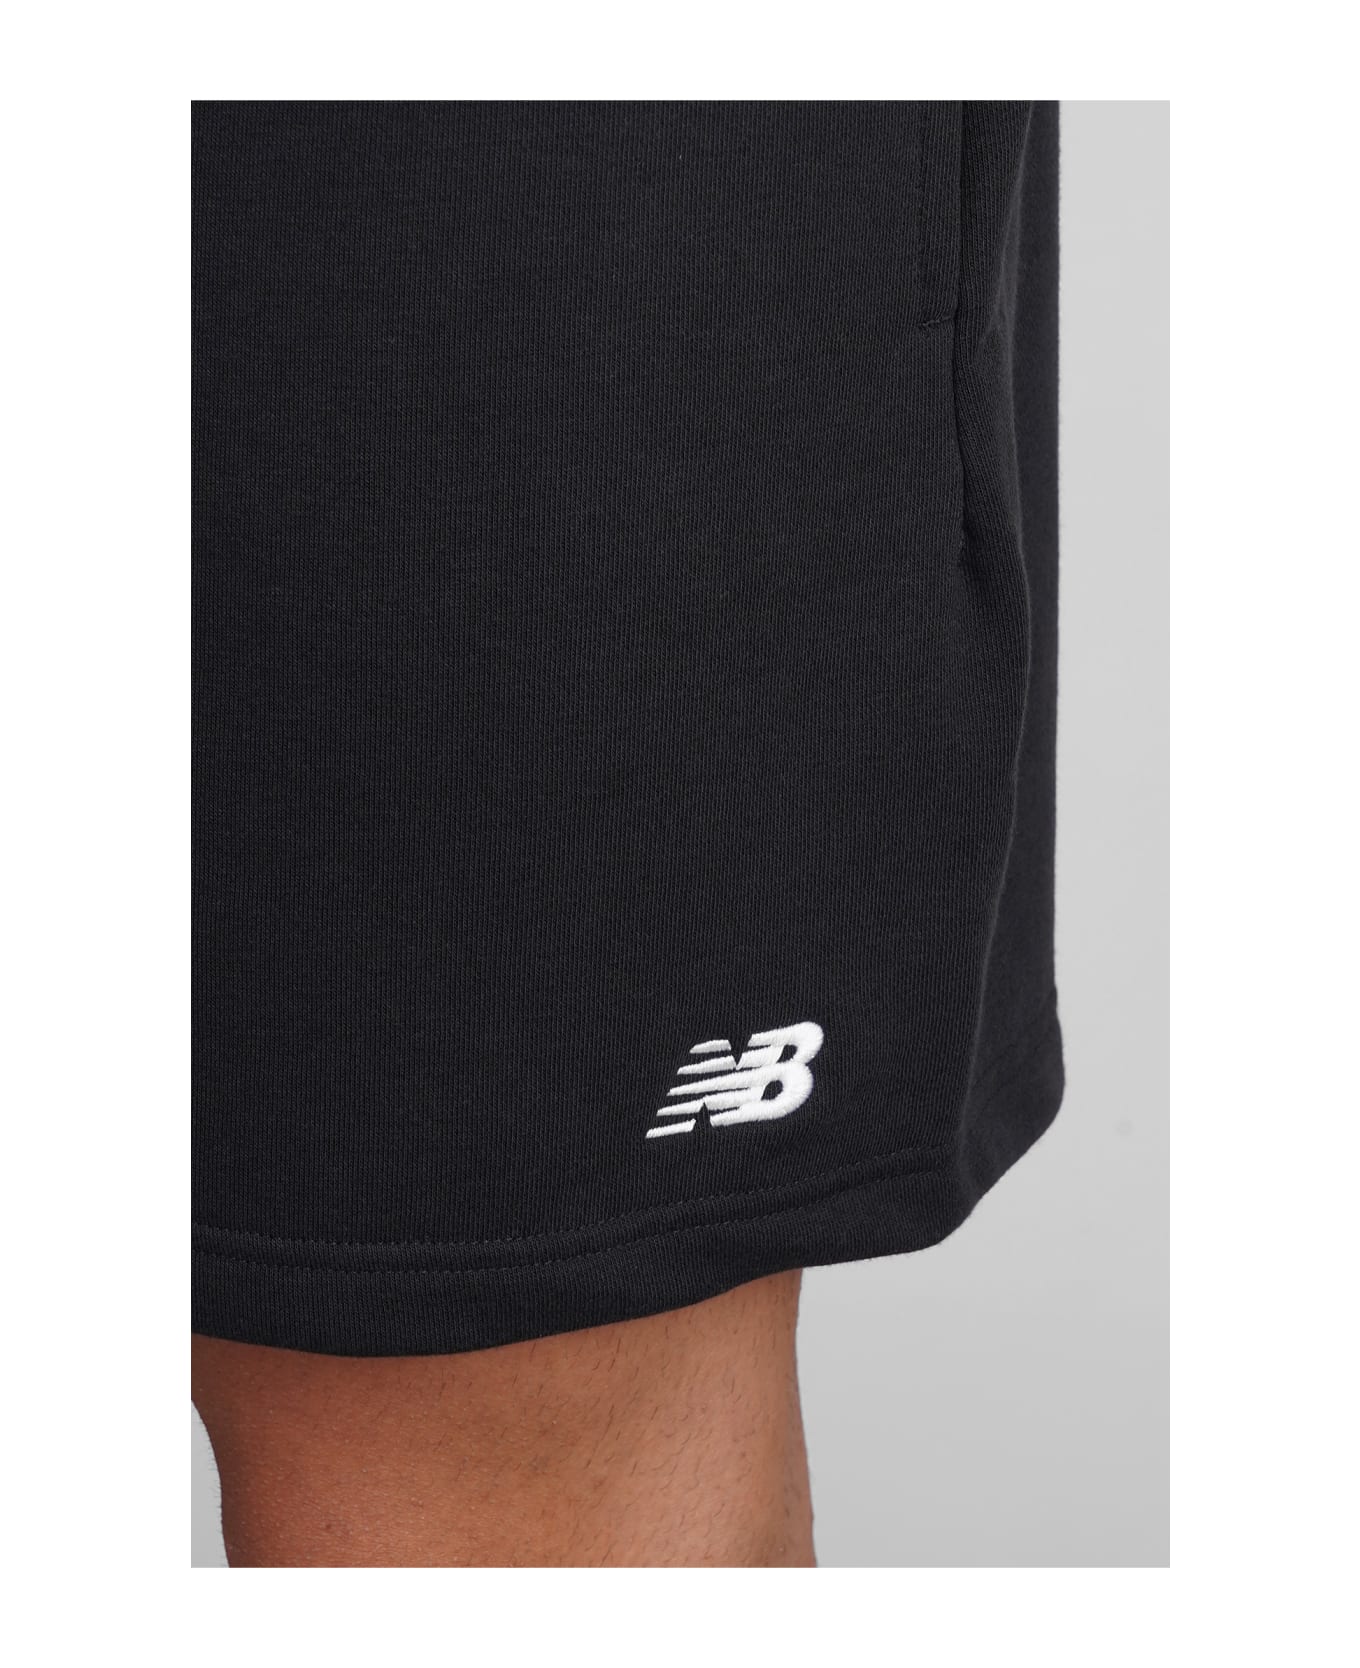 New Balance Shorts In Black Cotton - black